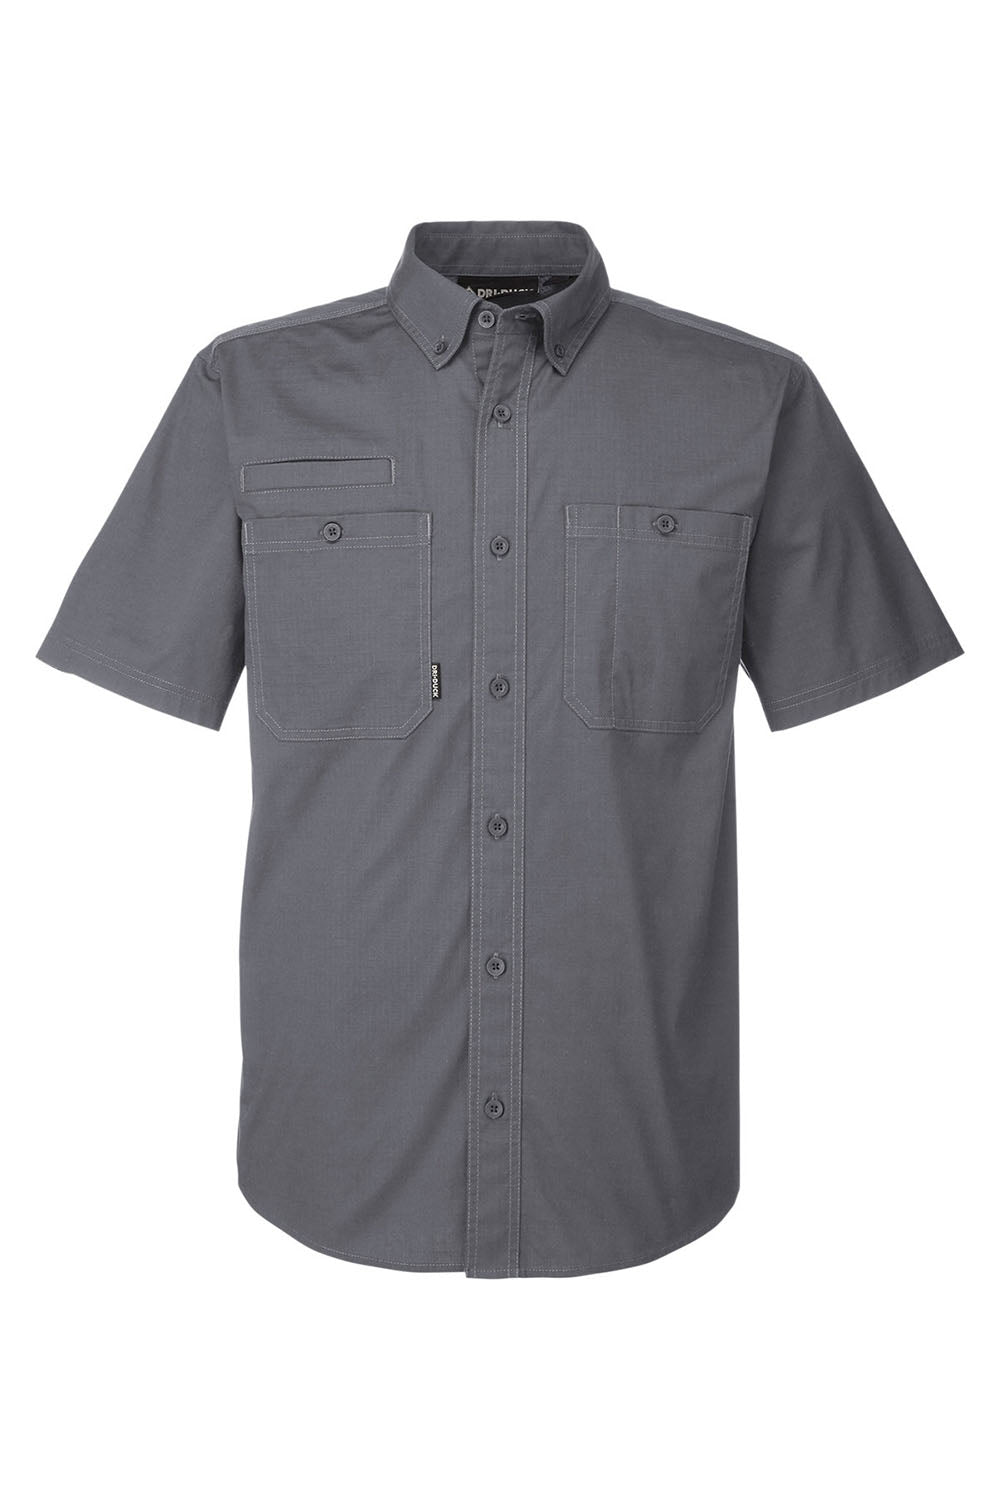 Dri Duck 4451DD Mens Craftsman Ripstop Short Sleeve Button Down Shirt w/ Double Pockets Gunmetal Grey Flat Front